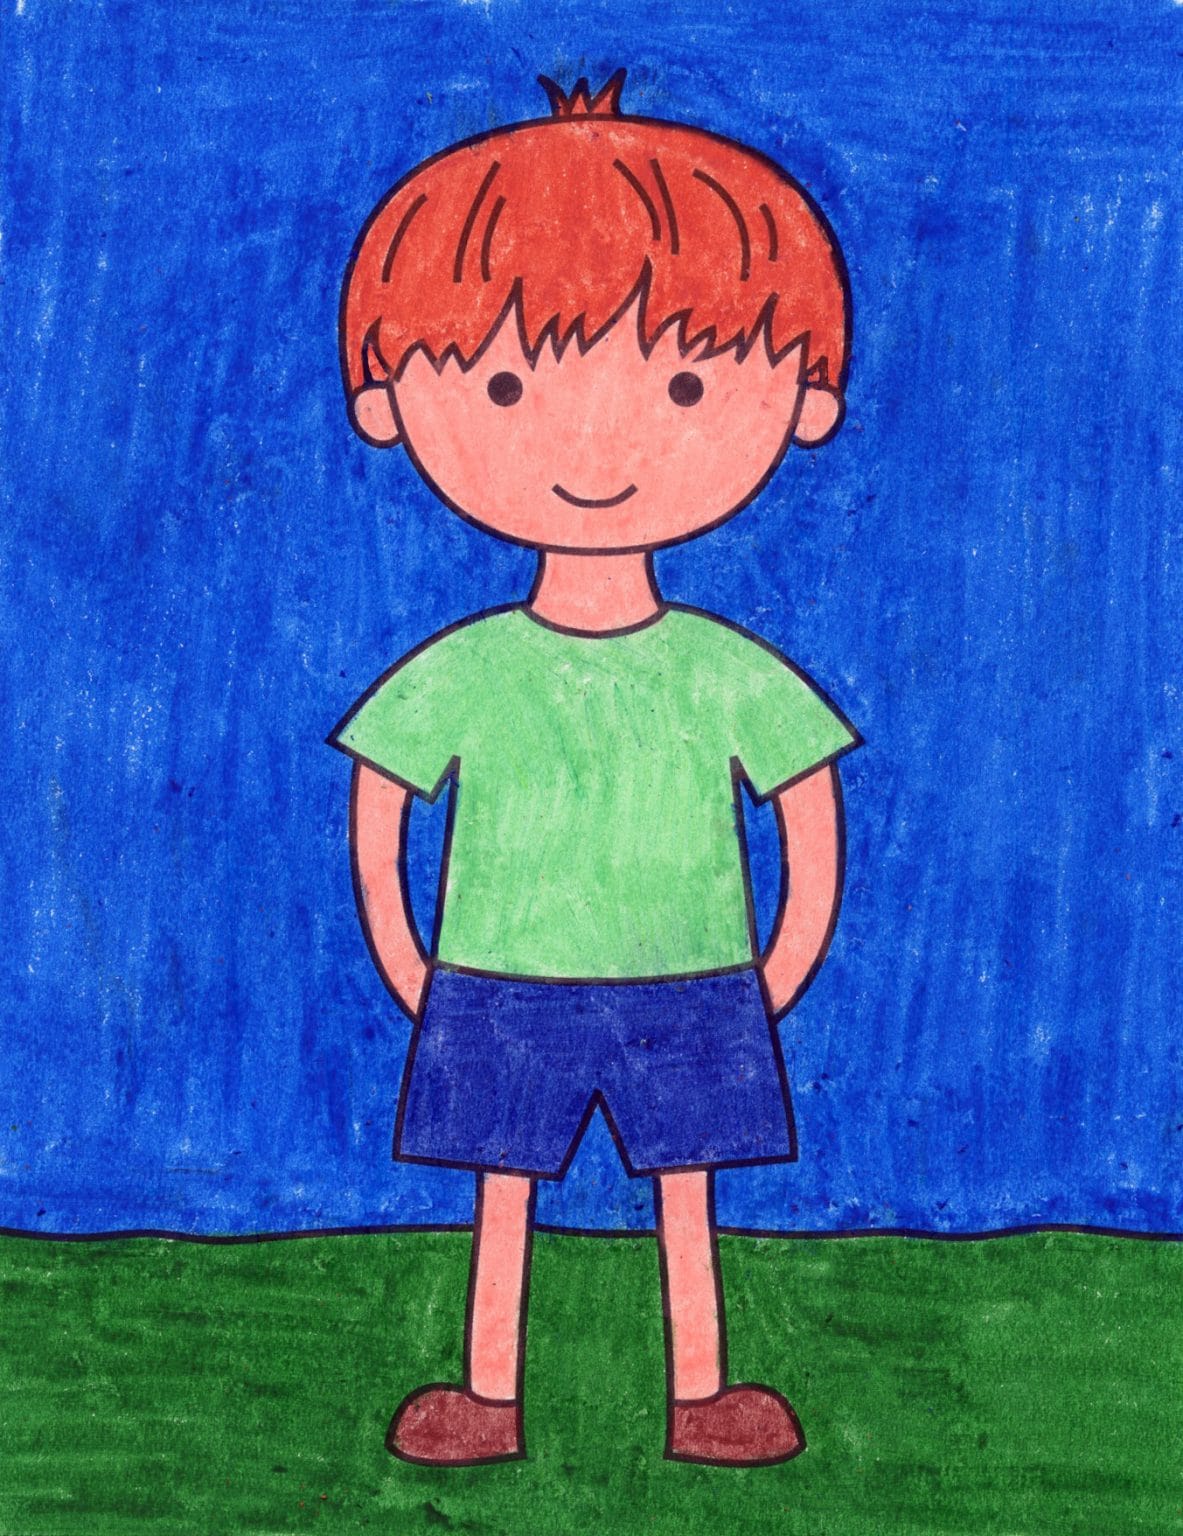 Easy Draw A Boy Sketch with Pencil